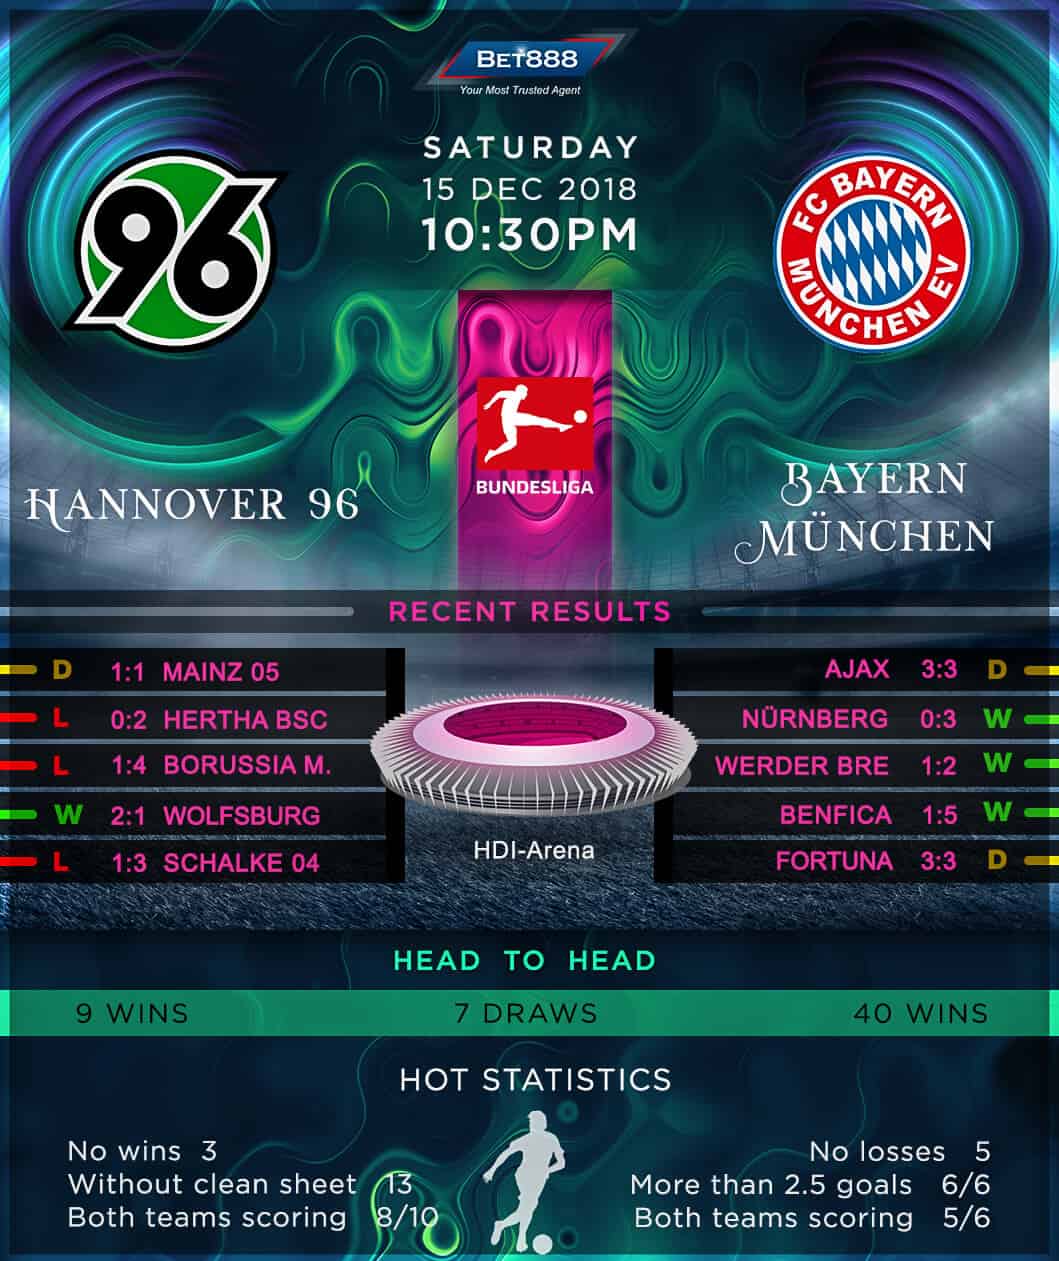 Hannover 96 vs Bayern Munich 15/12/18